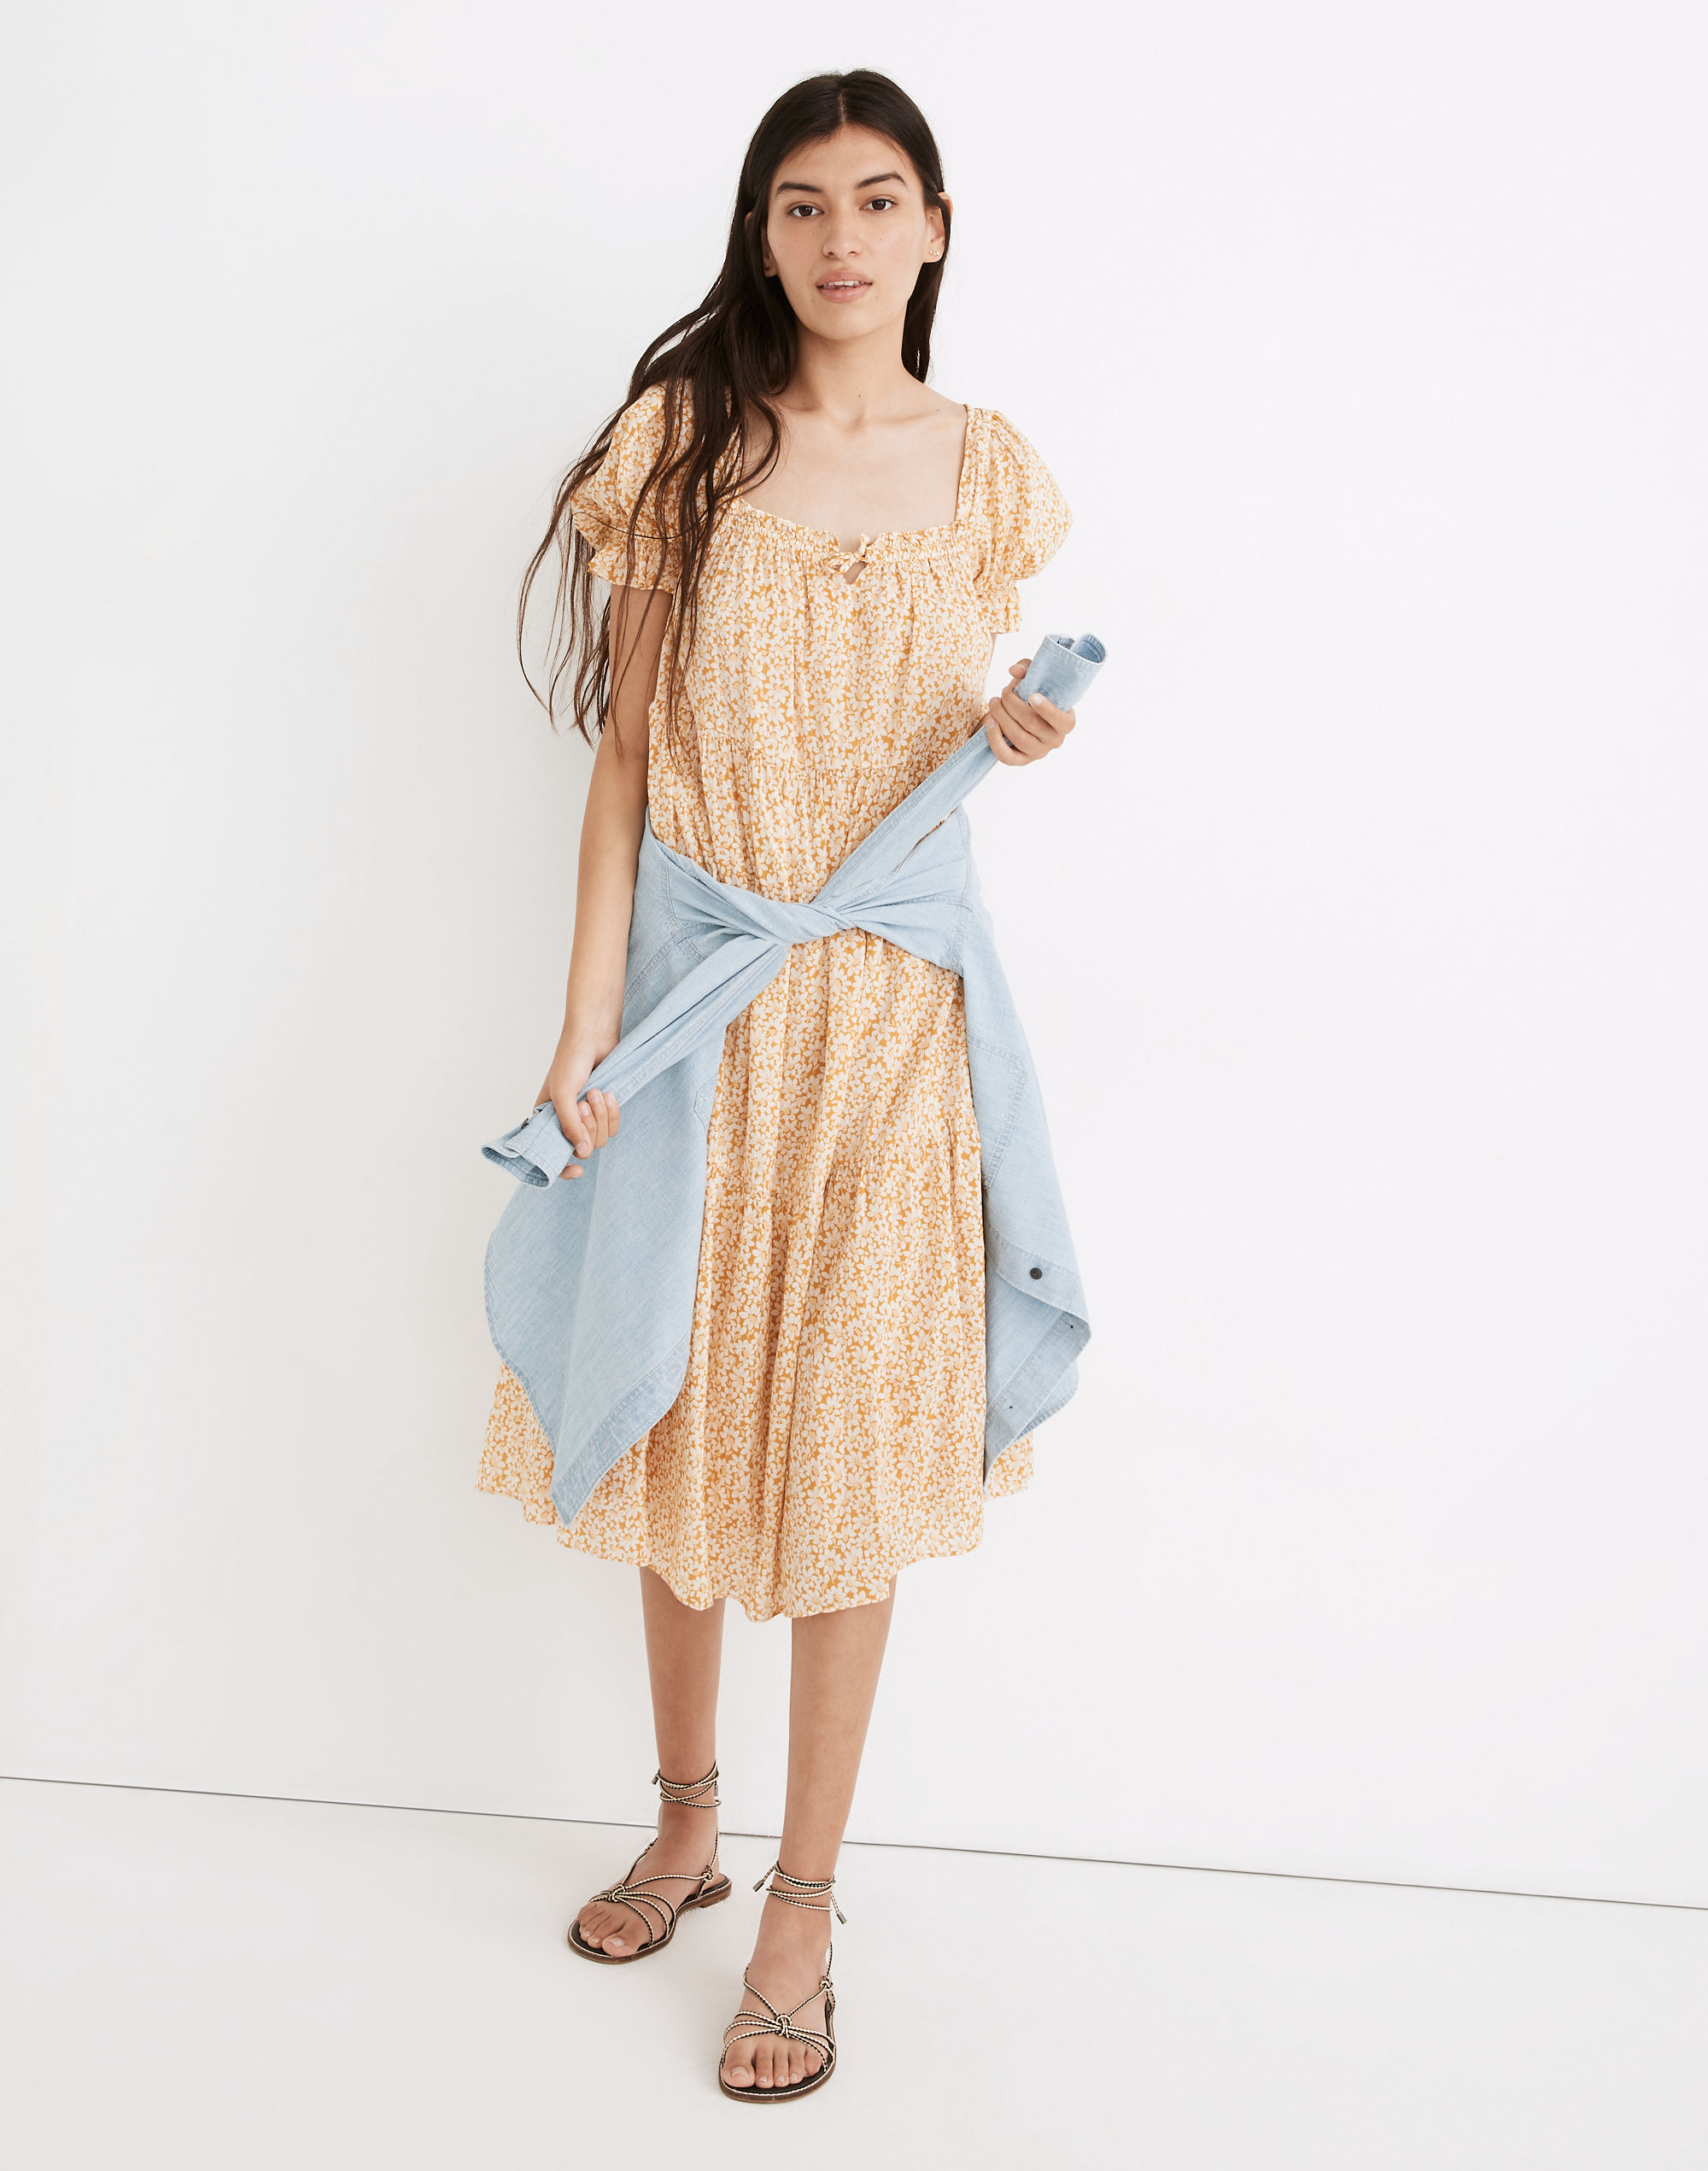 Floral Midi Skirt and Lace-up Blouse - MEMORANDUM